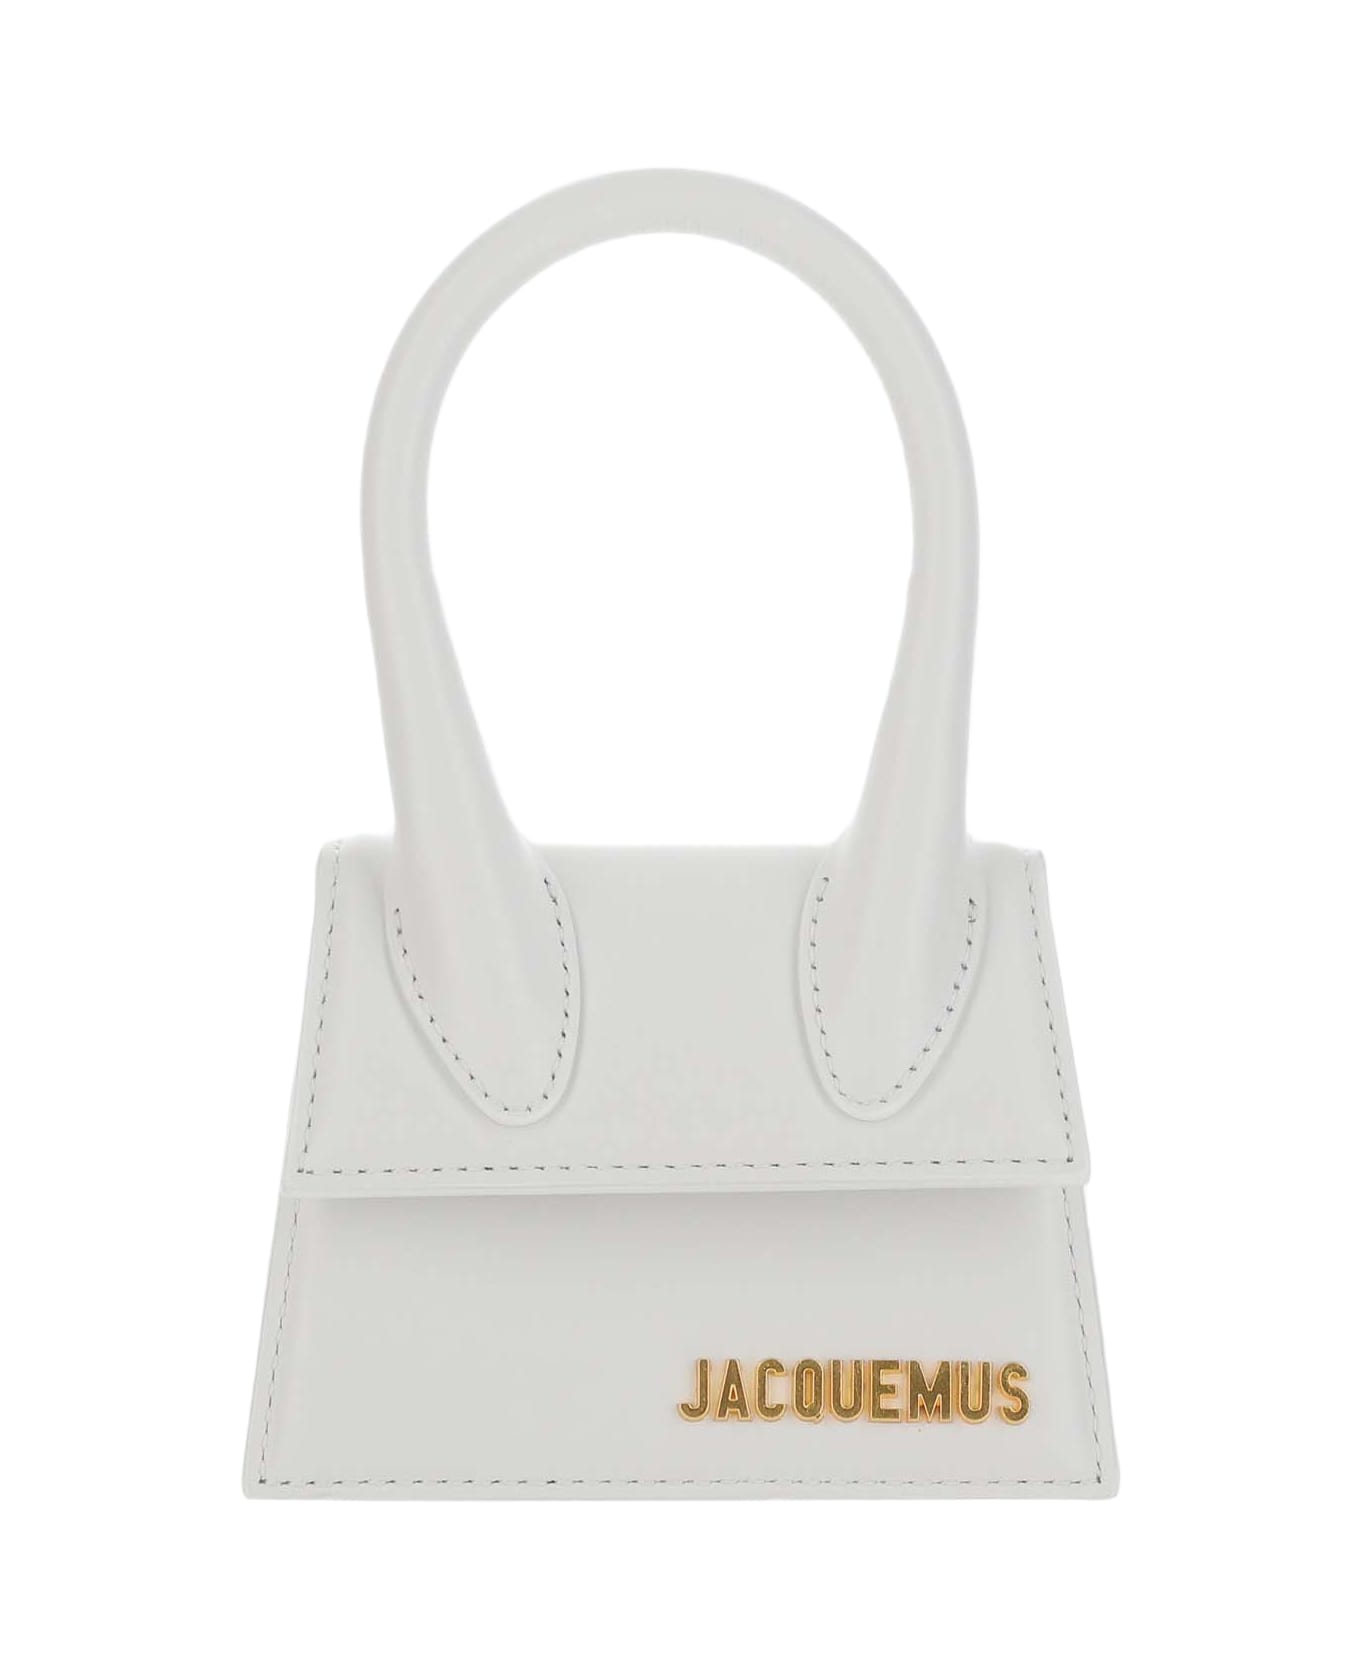 Jacquemus Le Chiquito Bag - White